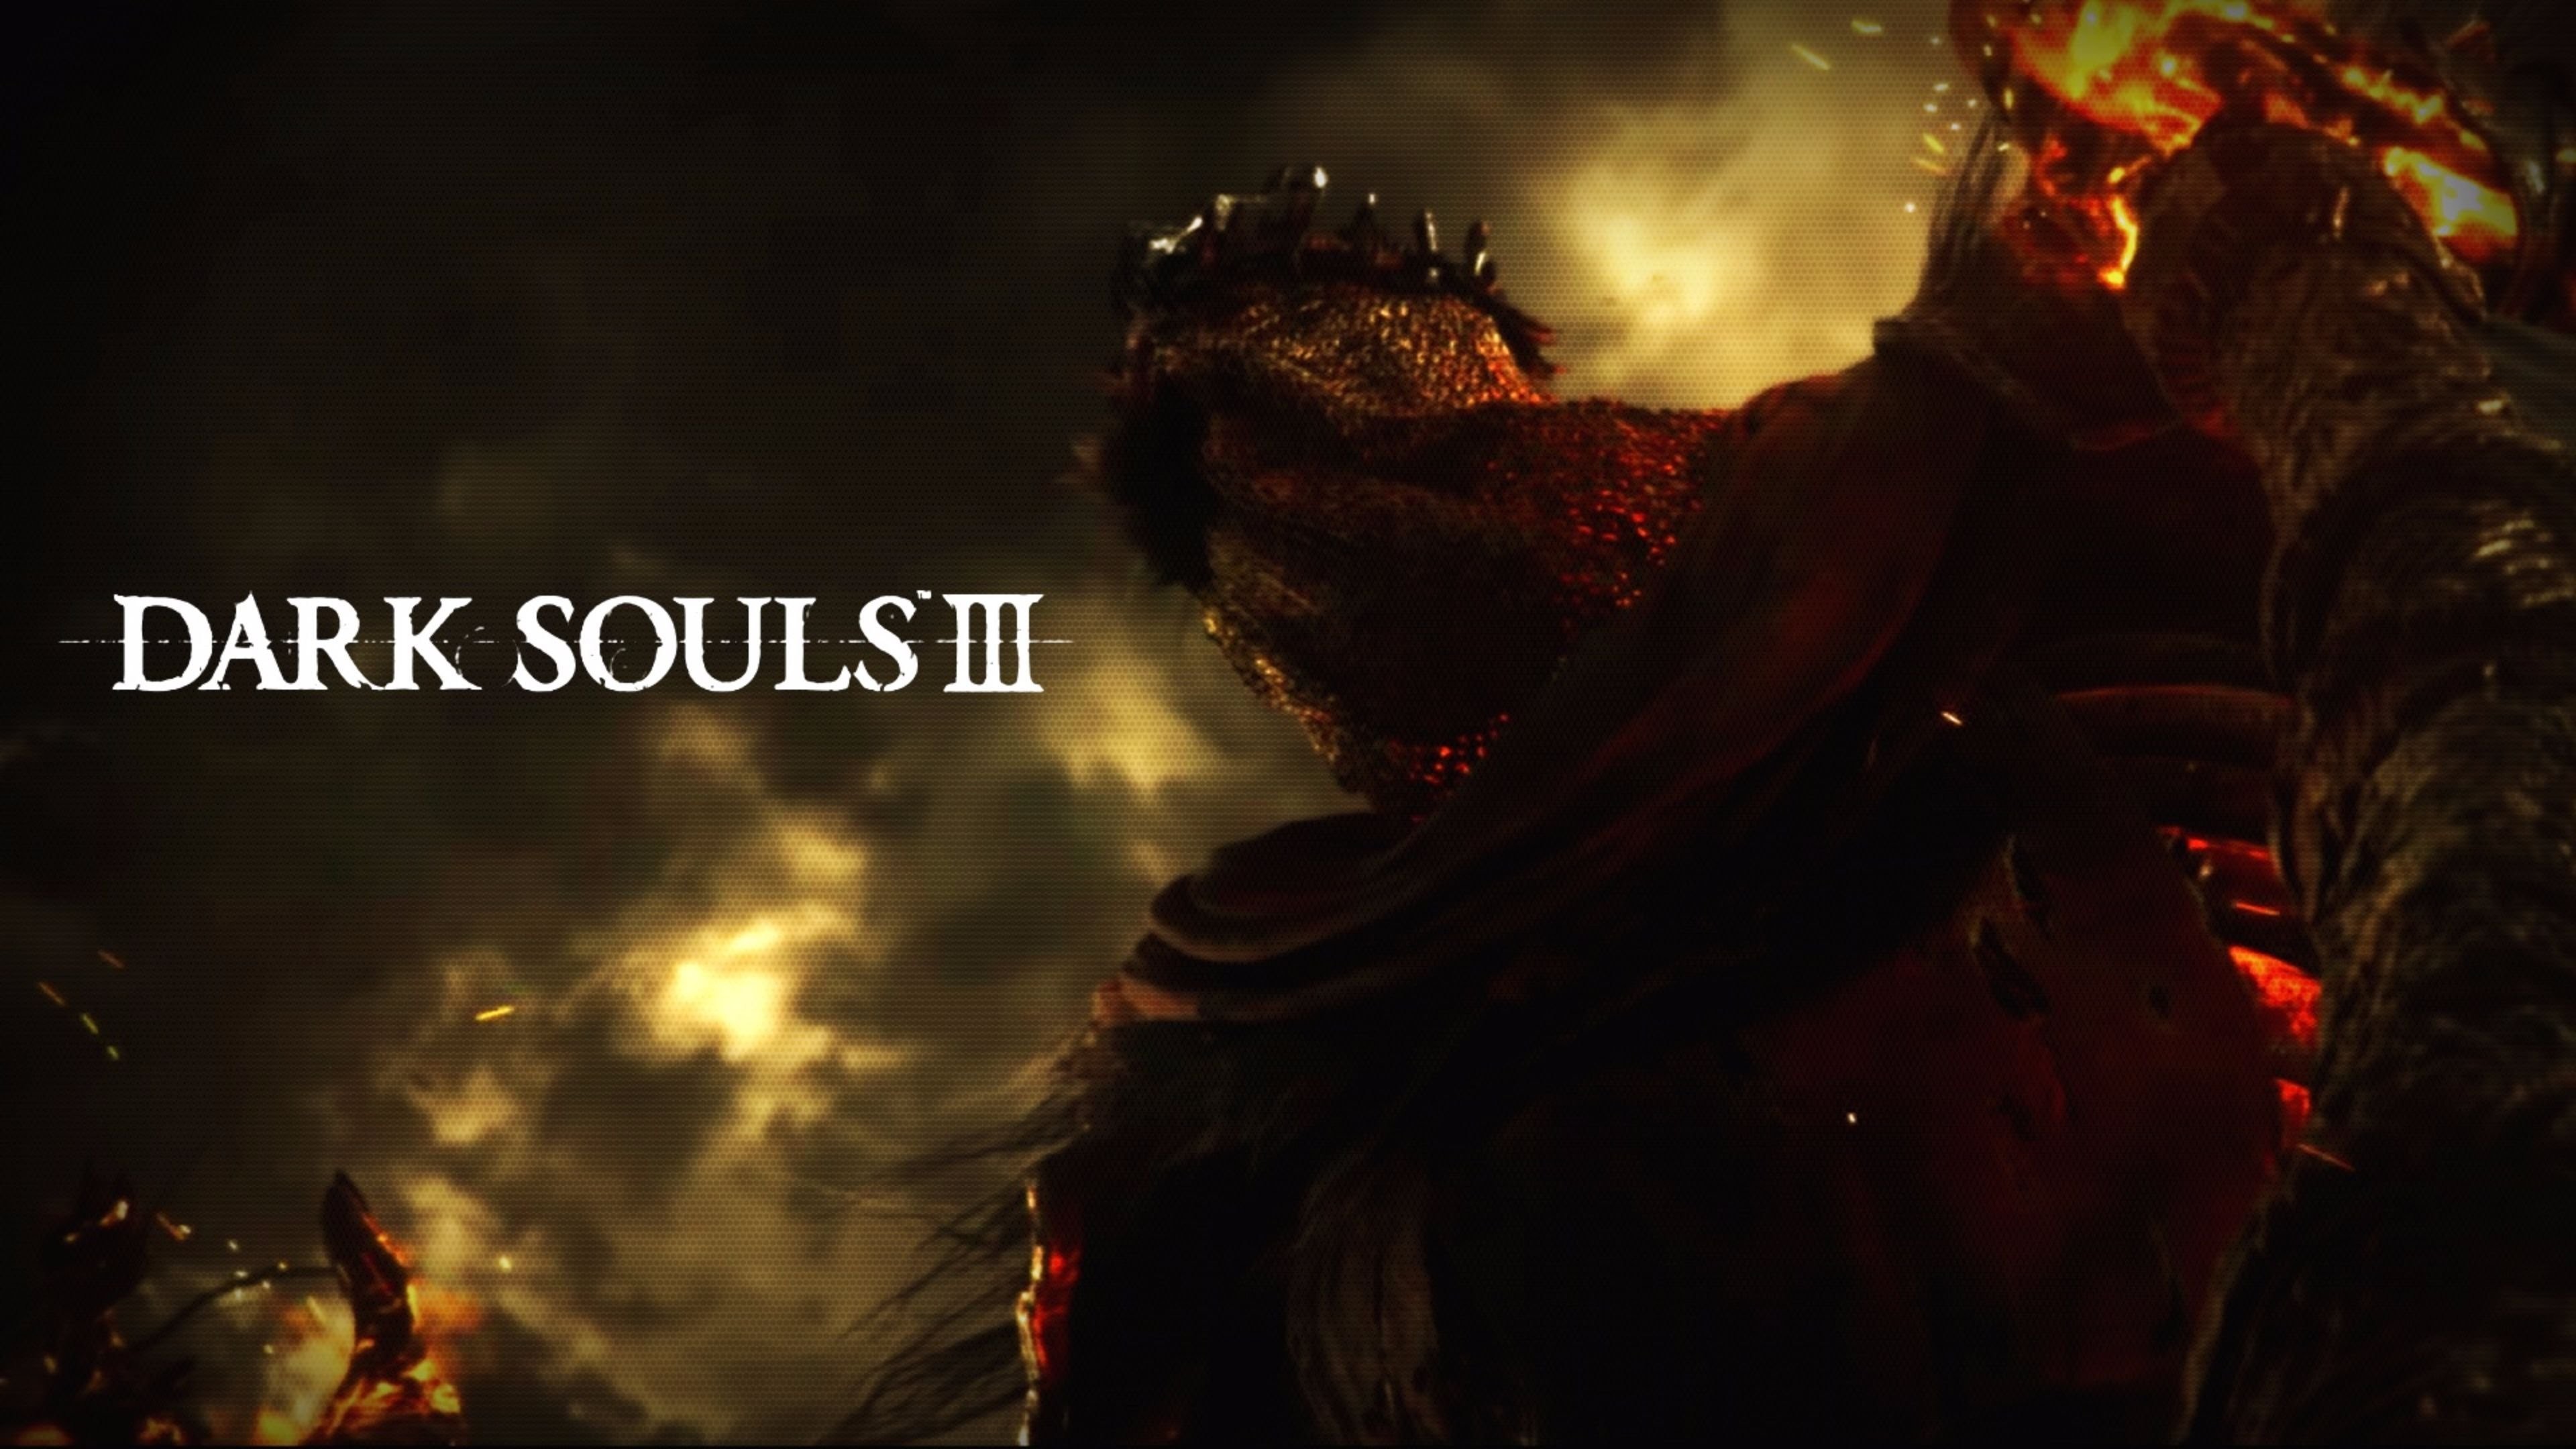 Dark Souls III HD Wallpaper Background ID716921